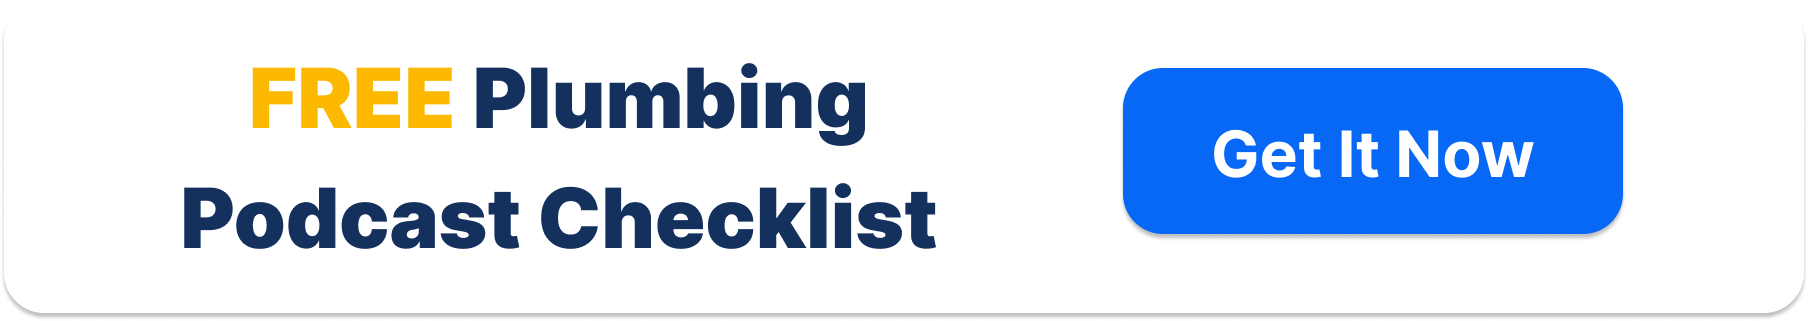 Plumbing Podcast Checklist Banner